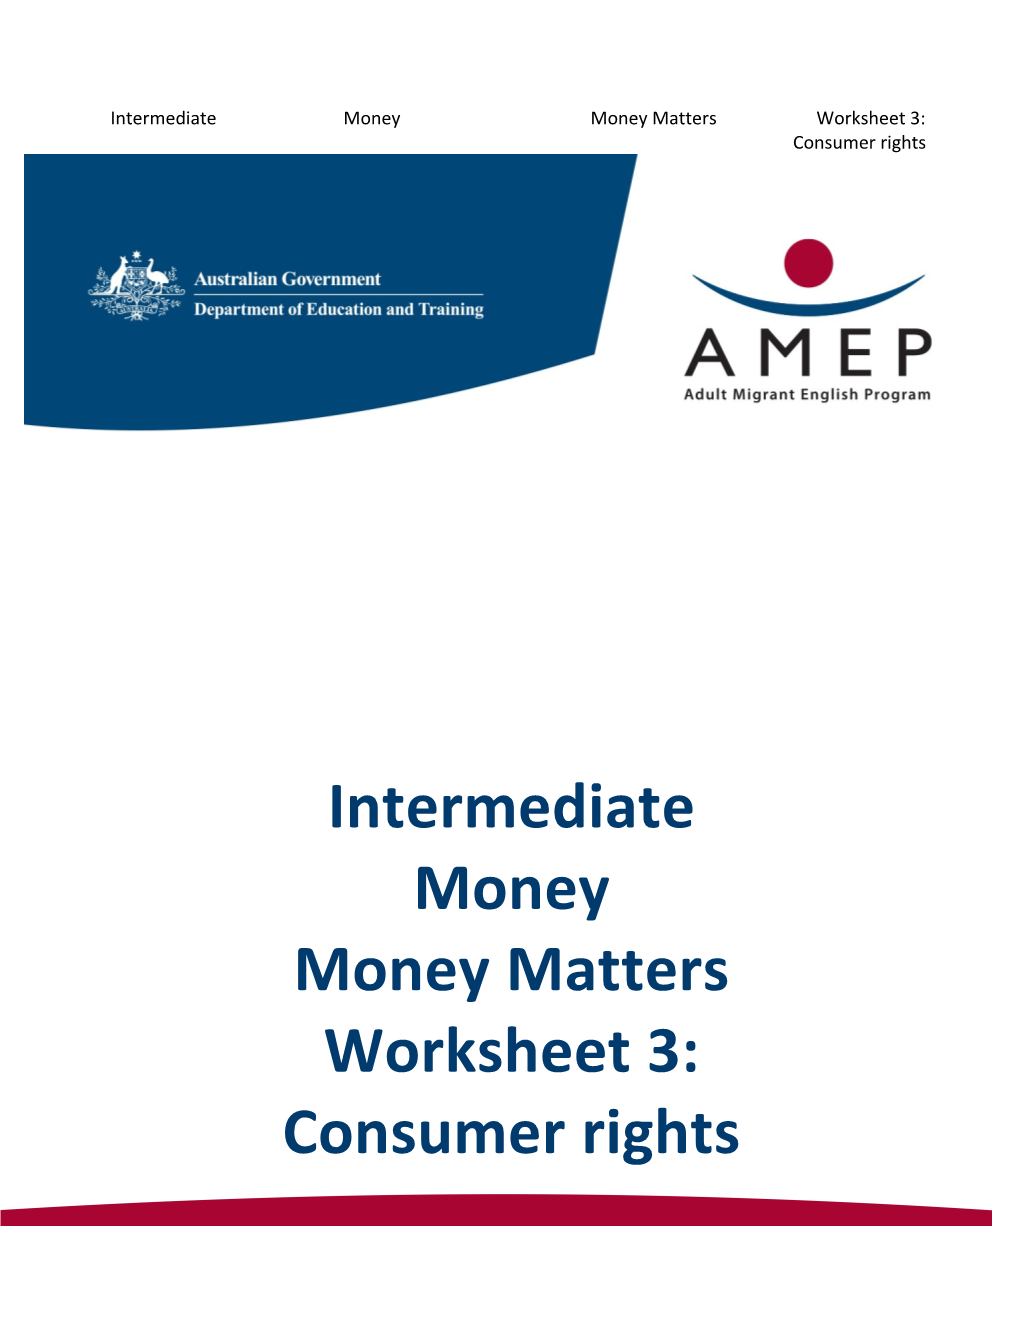 Intermediate Money Money Matters Worksheet 3: Consumer Rights